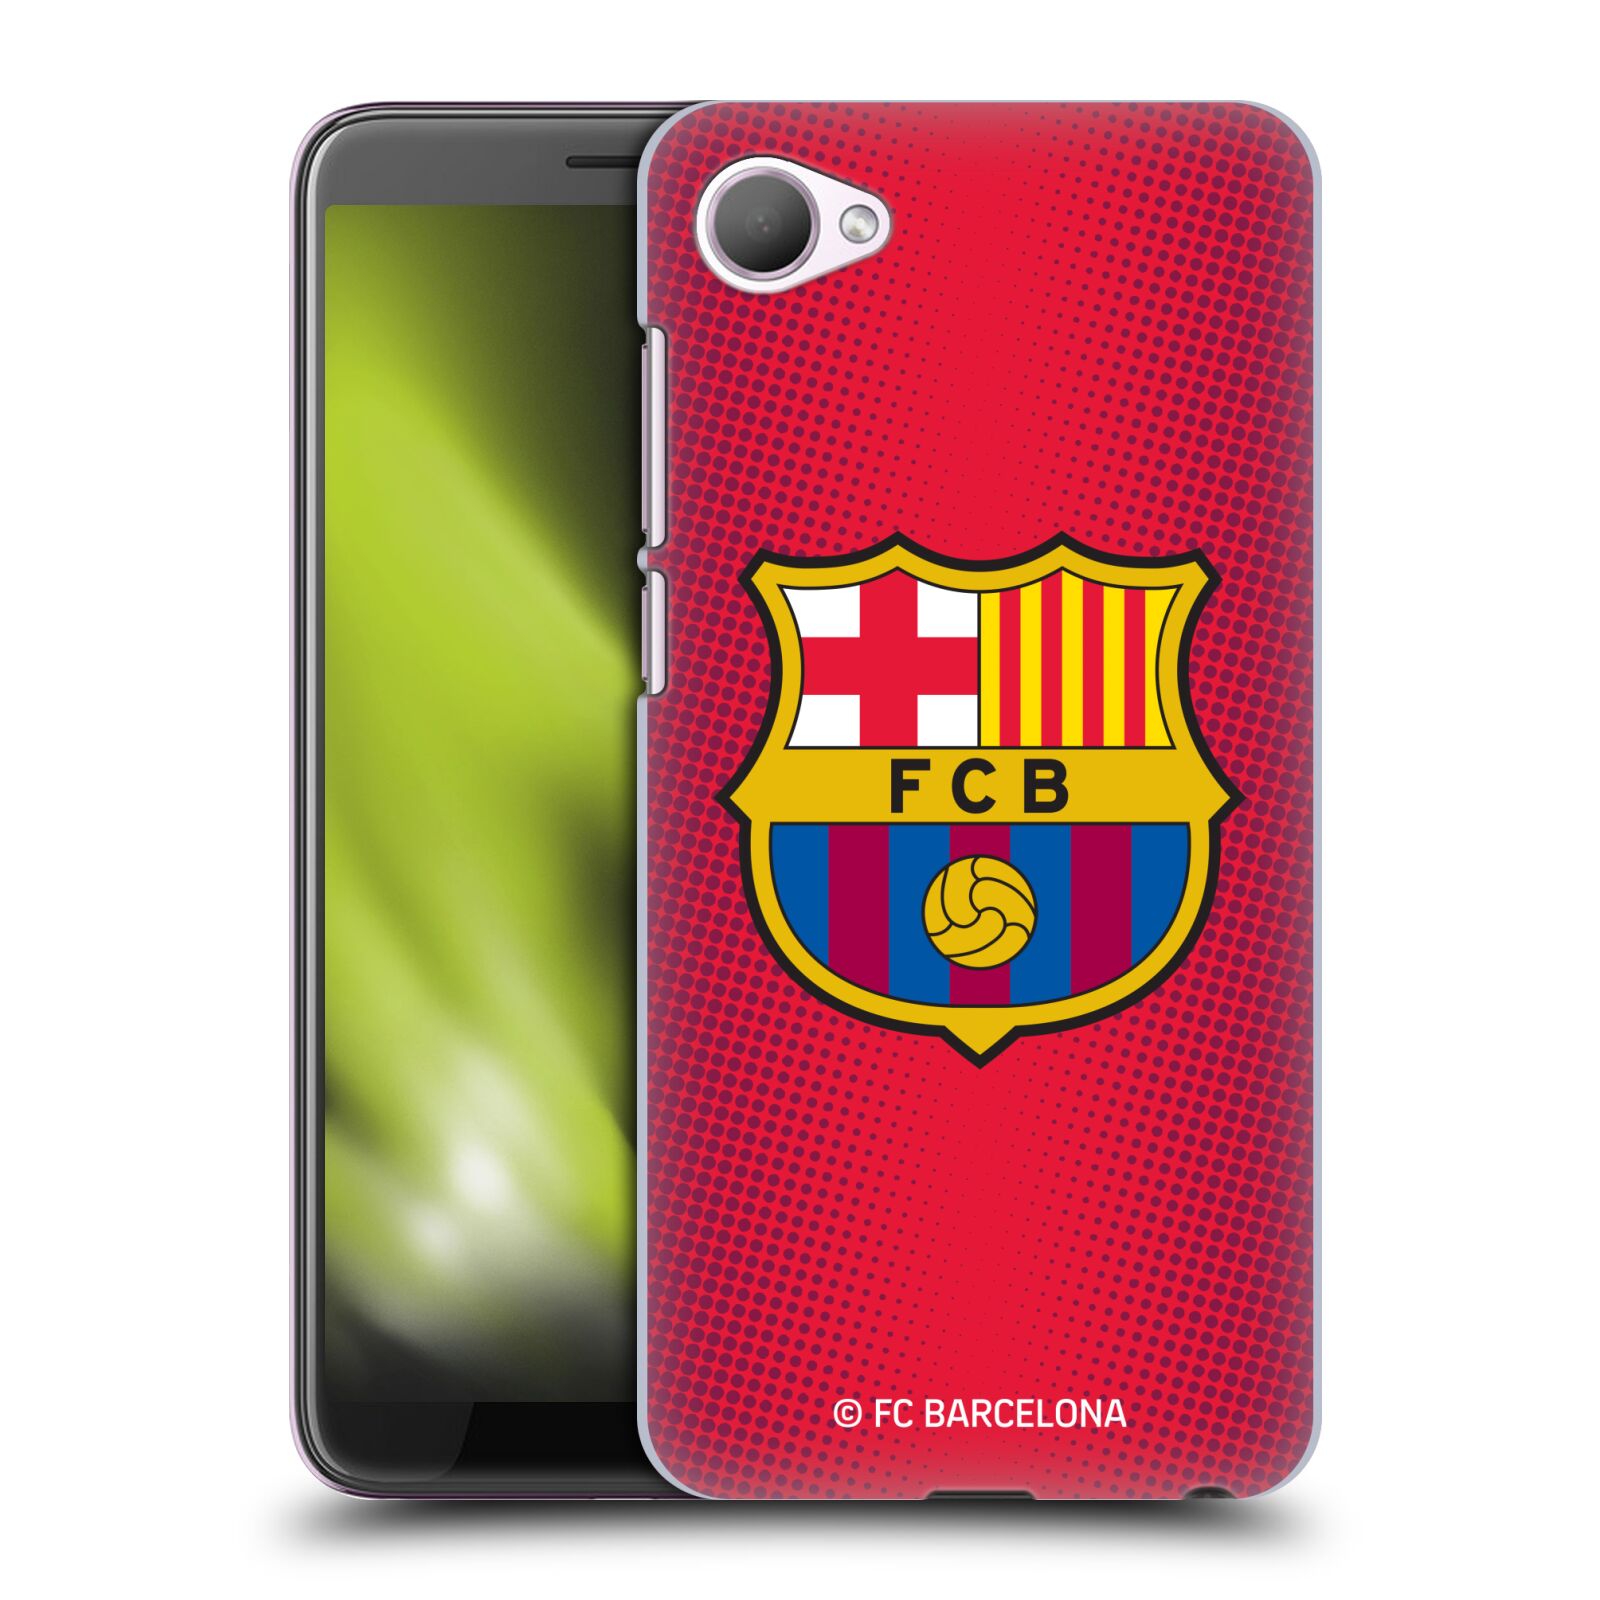 Obal na mobil HTC Desire 12 / Desire 12 DUAL SIM - HEAD CASE - FC BARCELONA - Velký znak červená a modrá